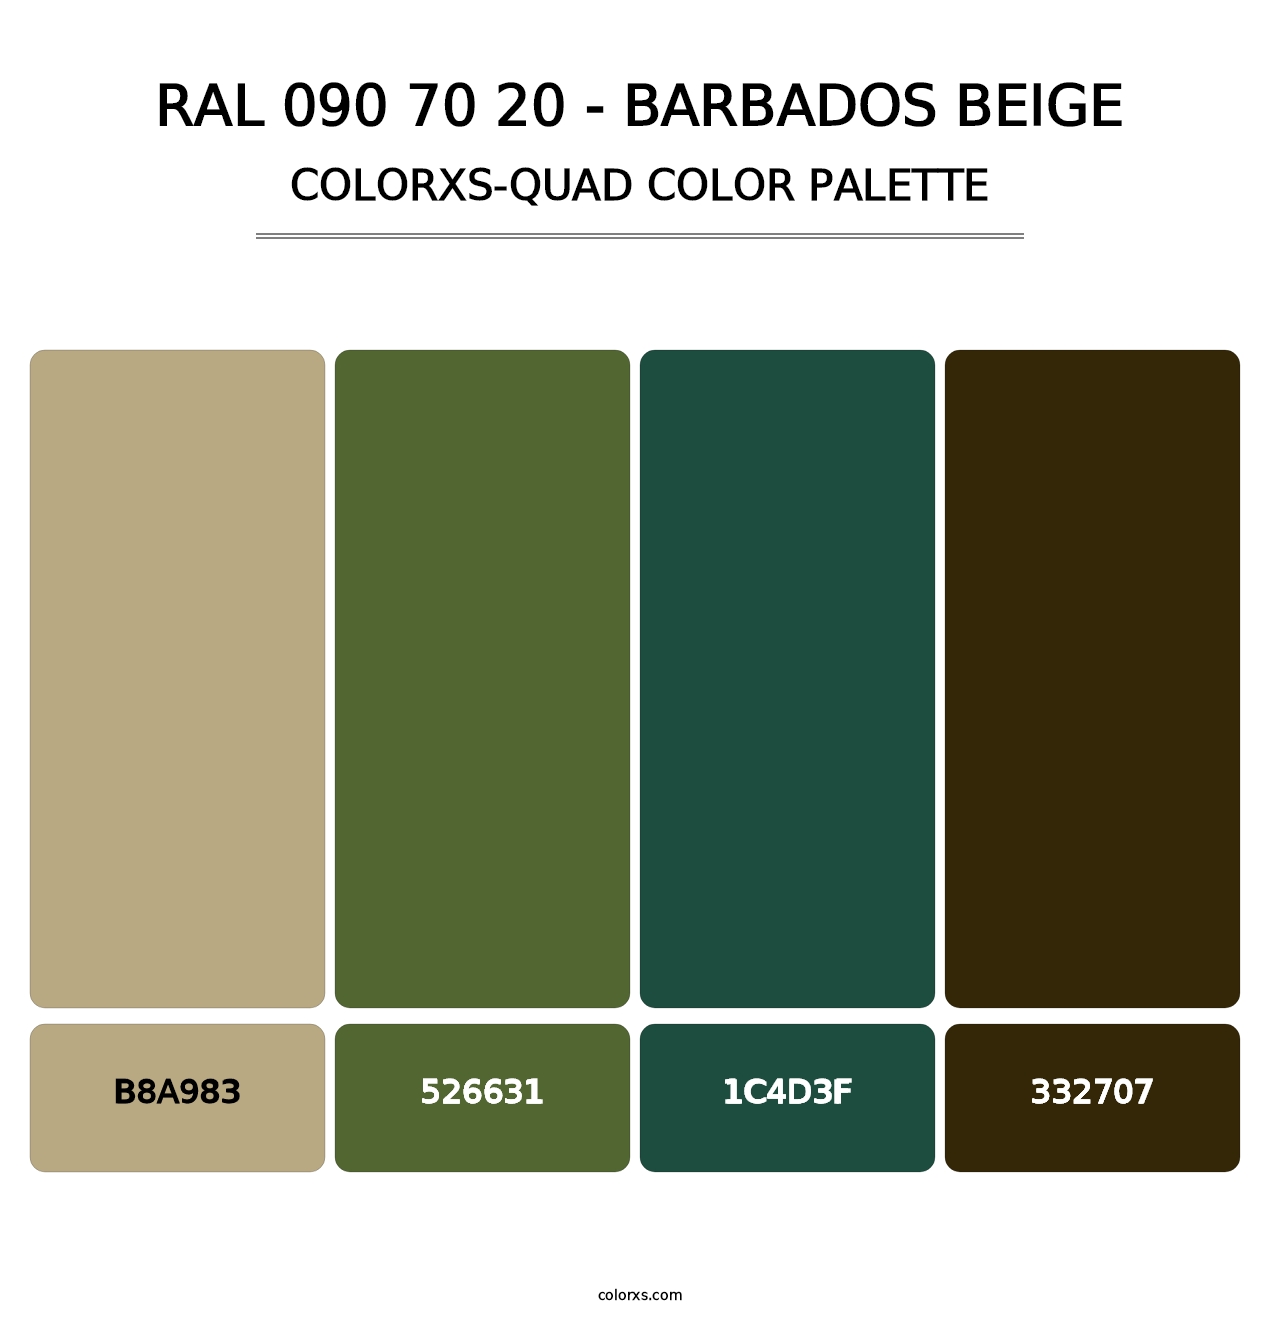 RAL 090 70 20 - Barbados Beige - Colorxs Quad Palette